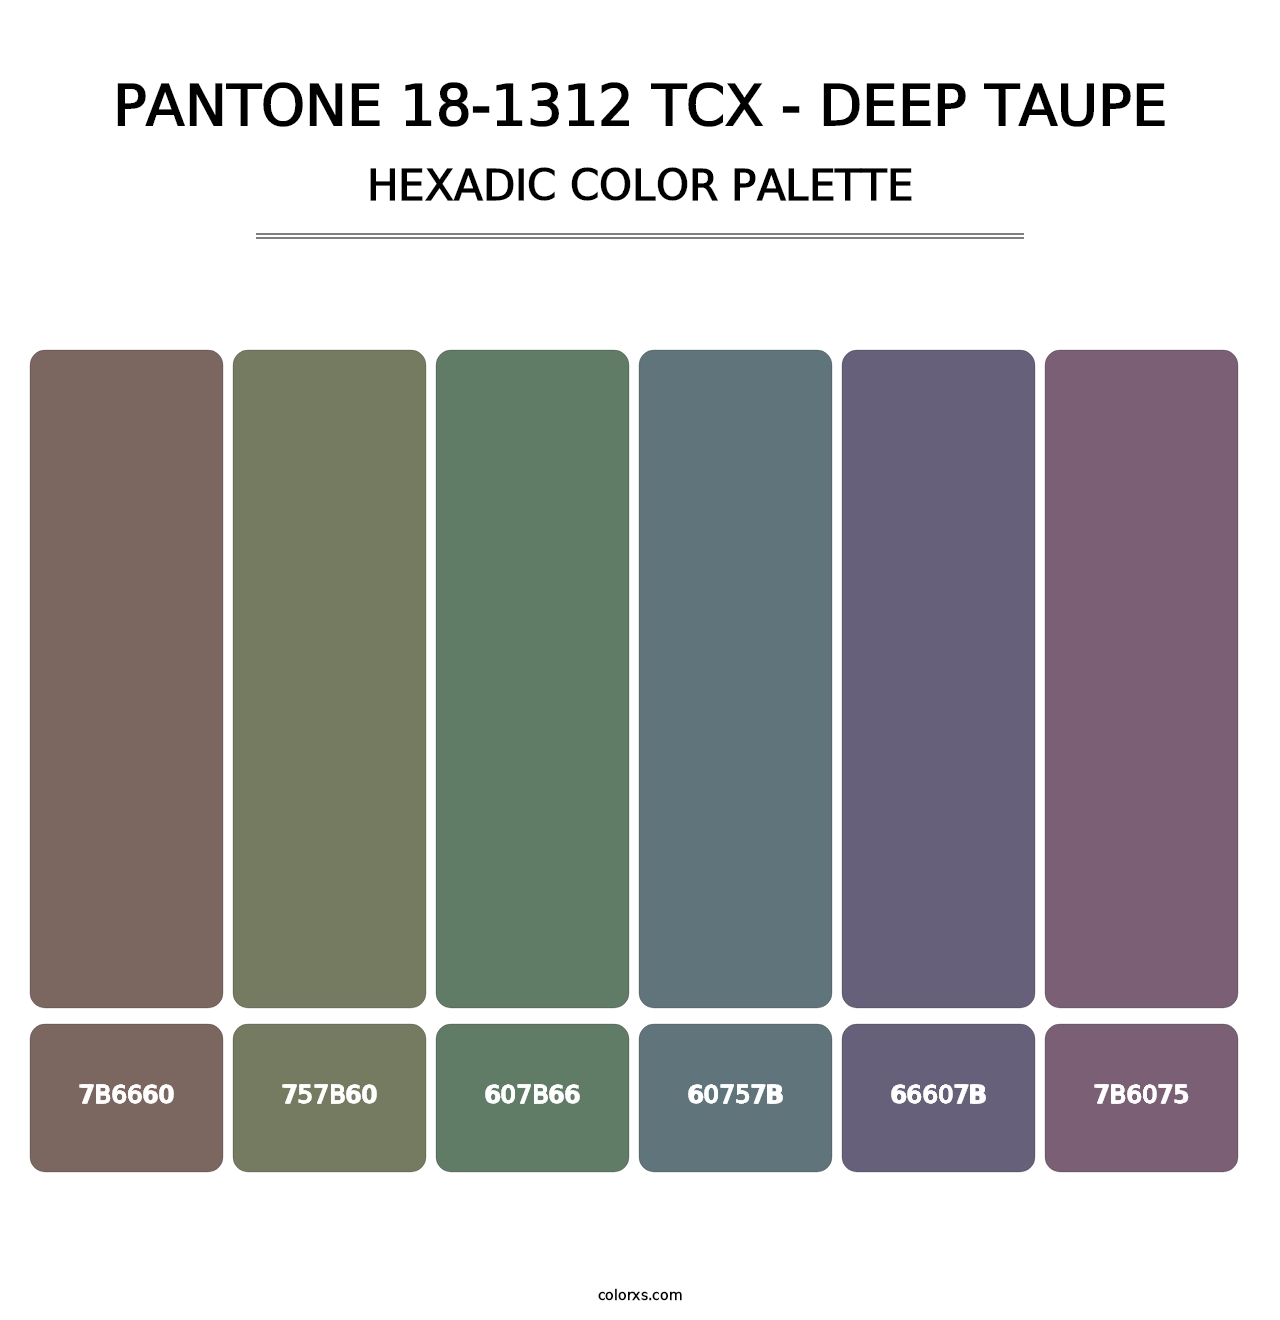 PANTONE 18-1312 TCX - Deep Taupe - Hexadic Color Palette